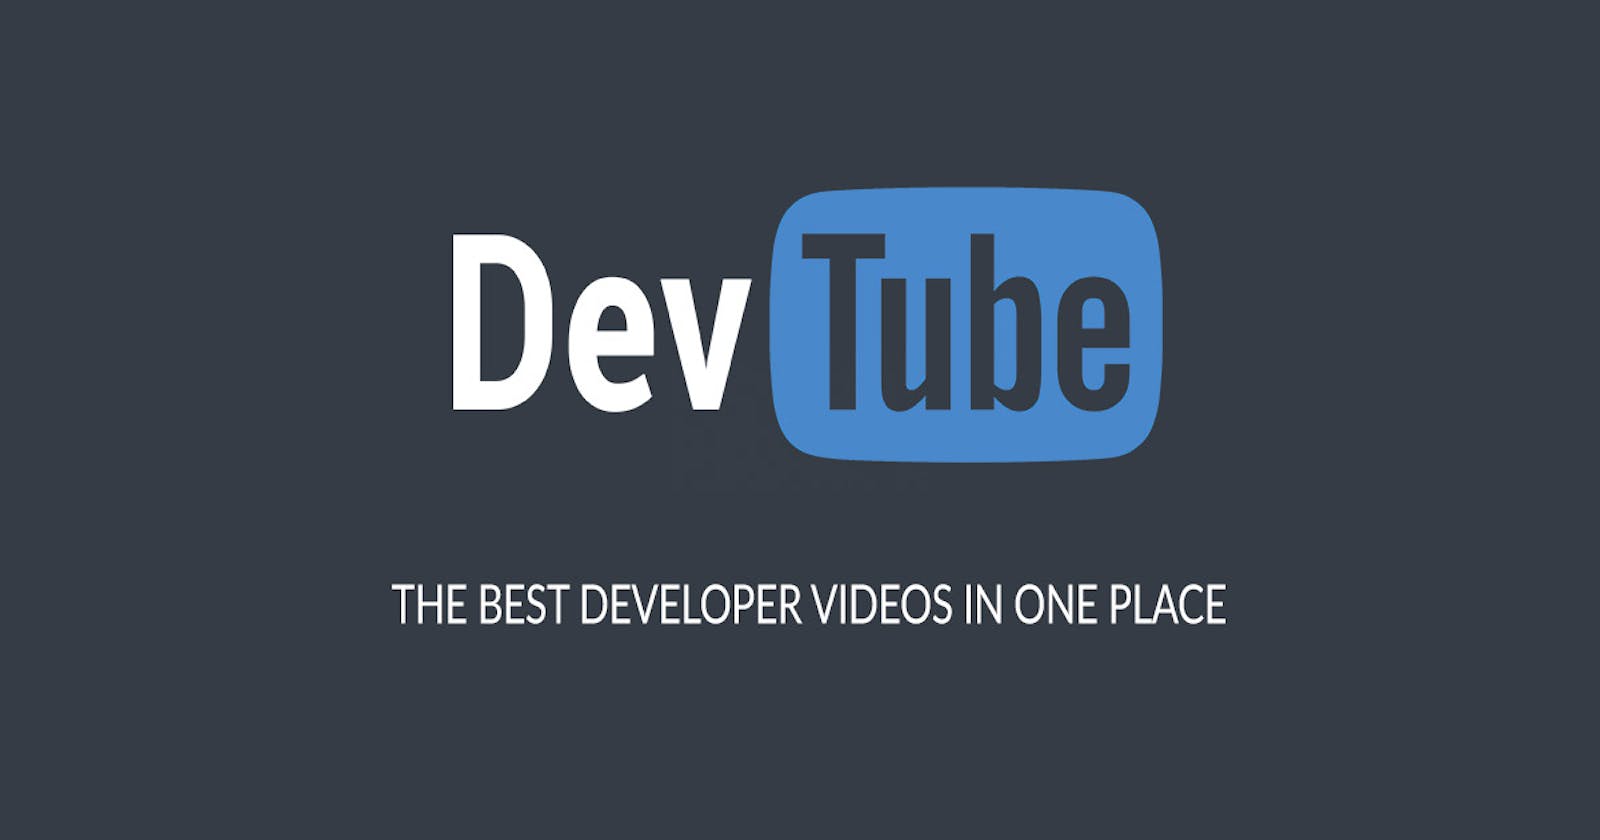 DevTube - The best developer videos in one place